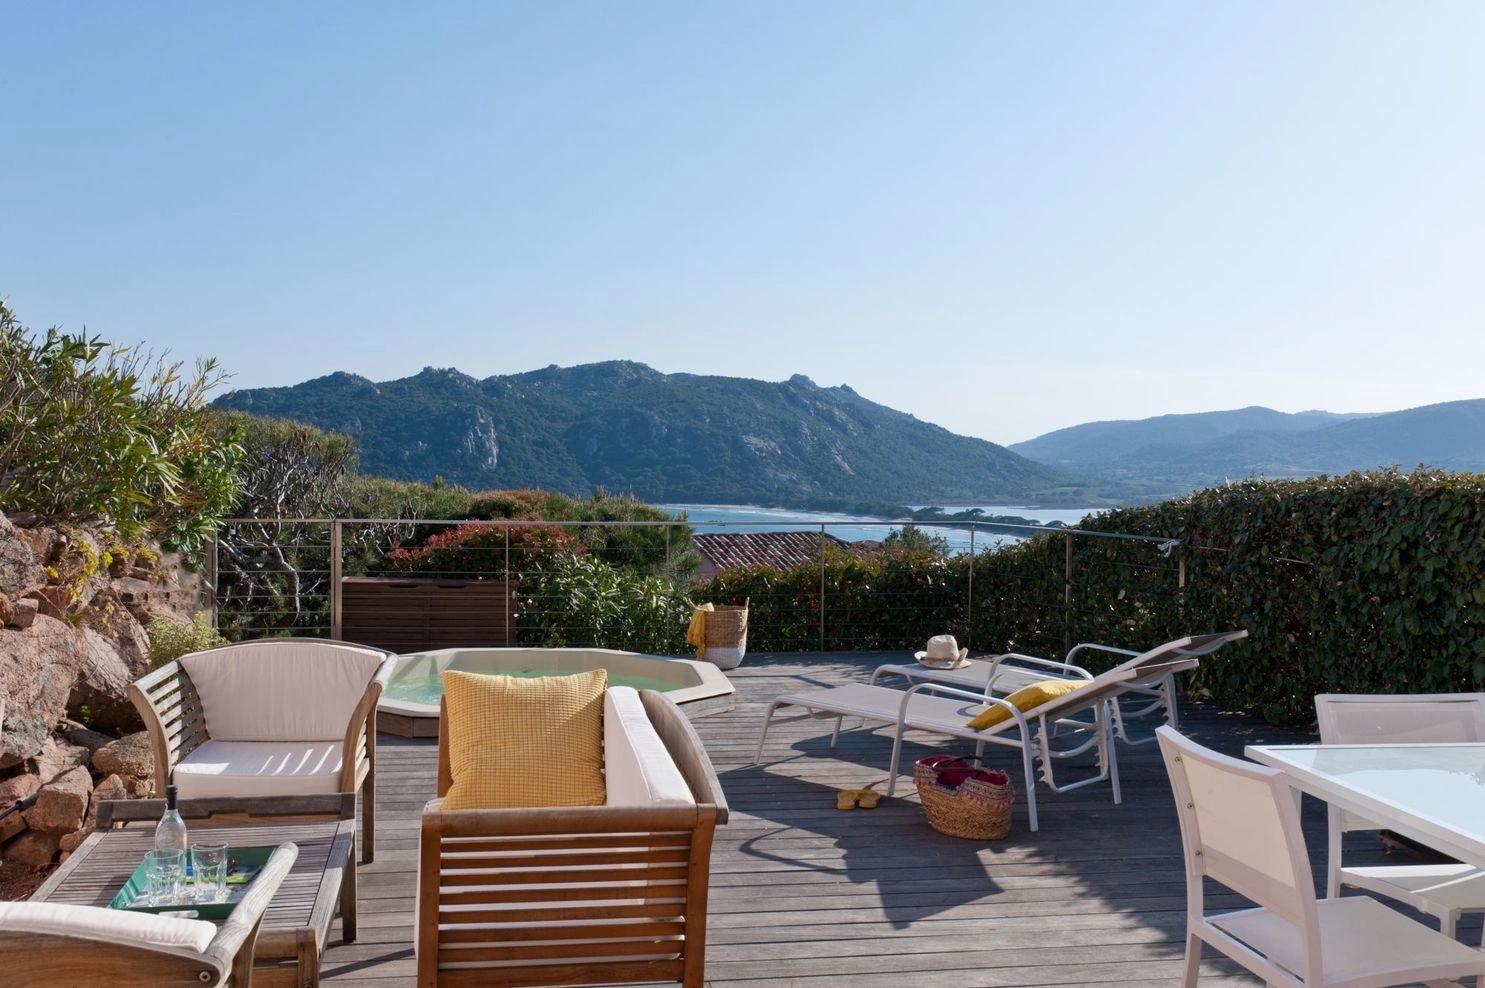 Location de vacances avec grande terrasse à Santa Giulia